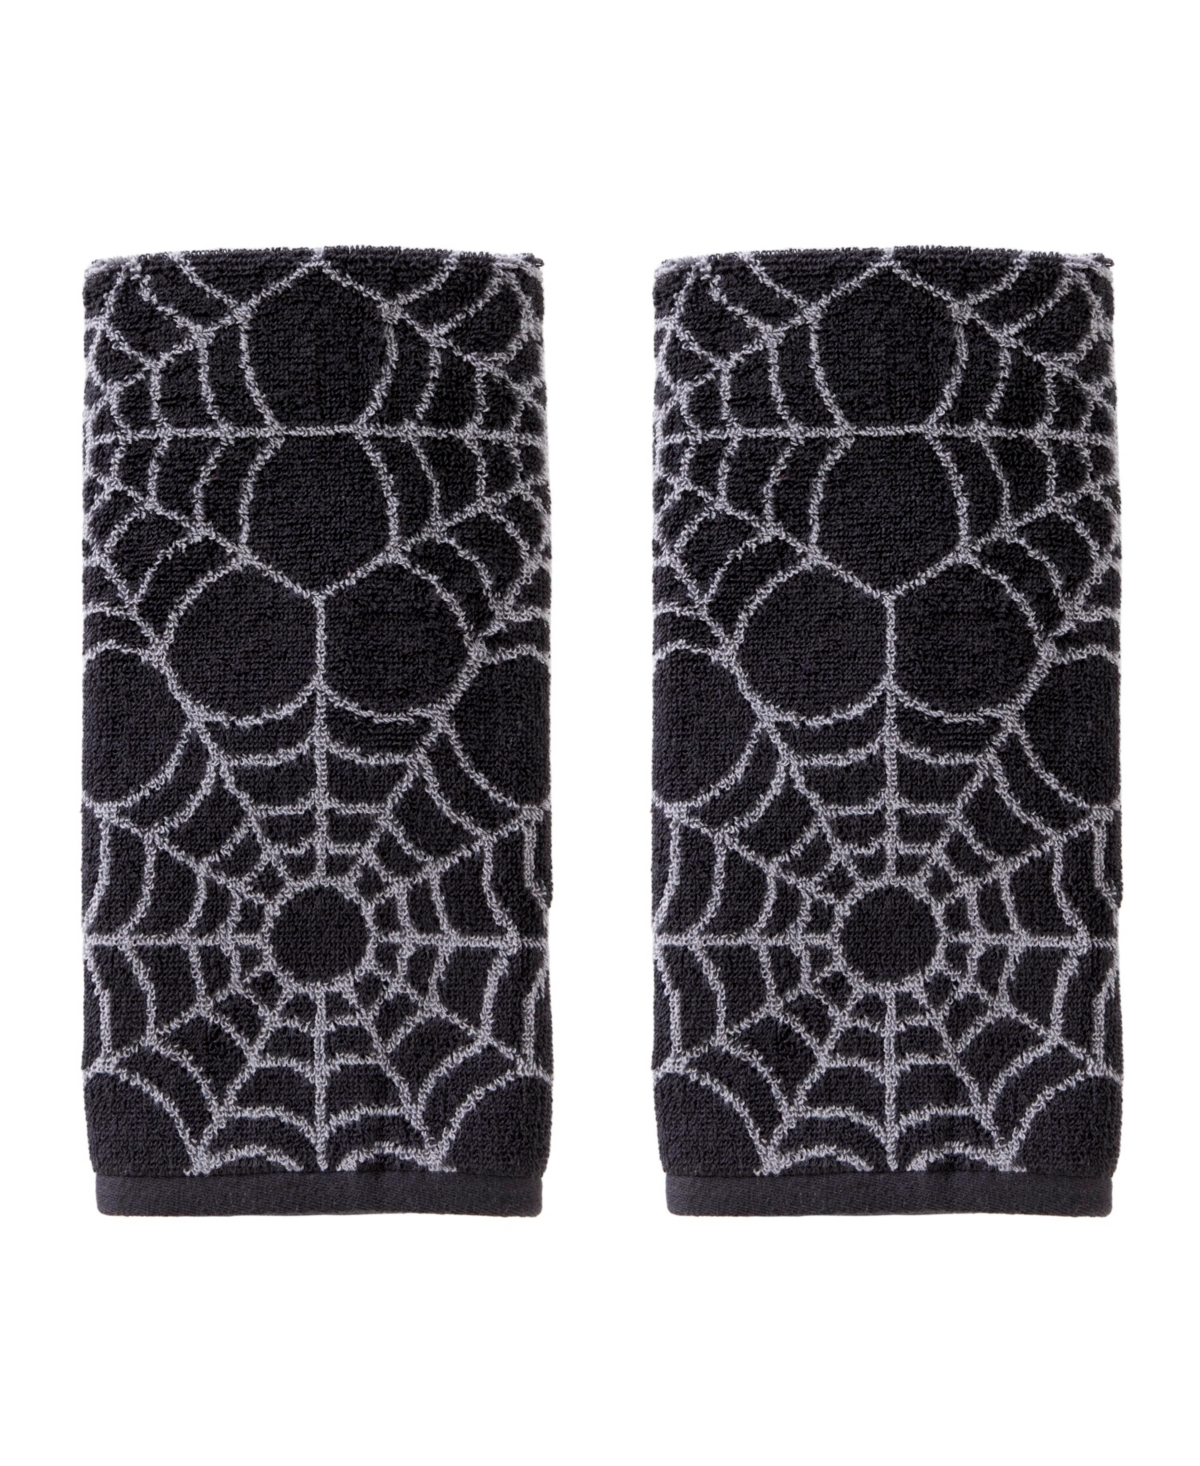 Skl Home Spider Web Cotton 2 Piece Hand Towel Set In Black